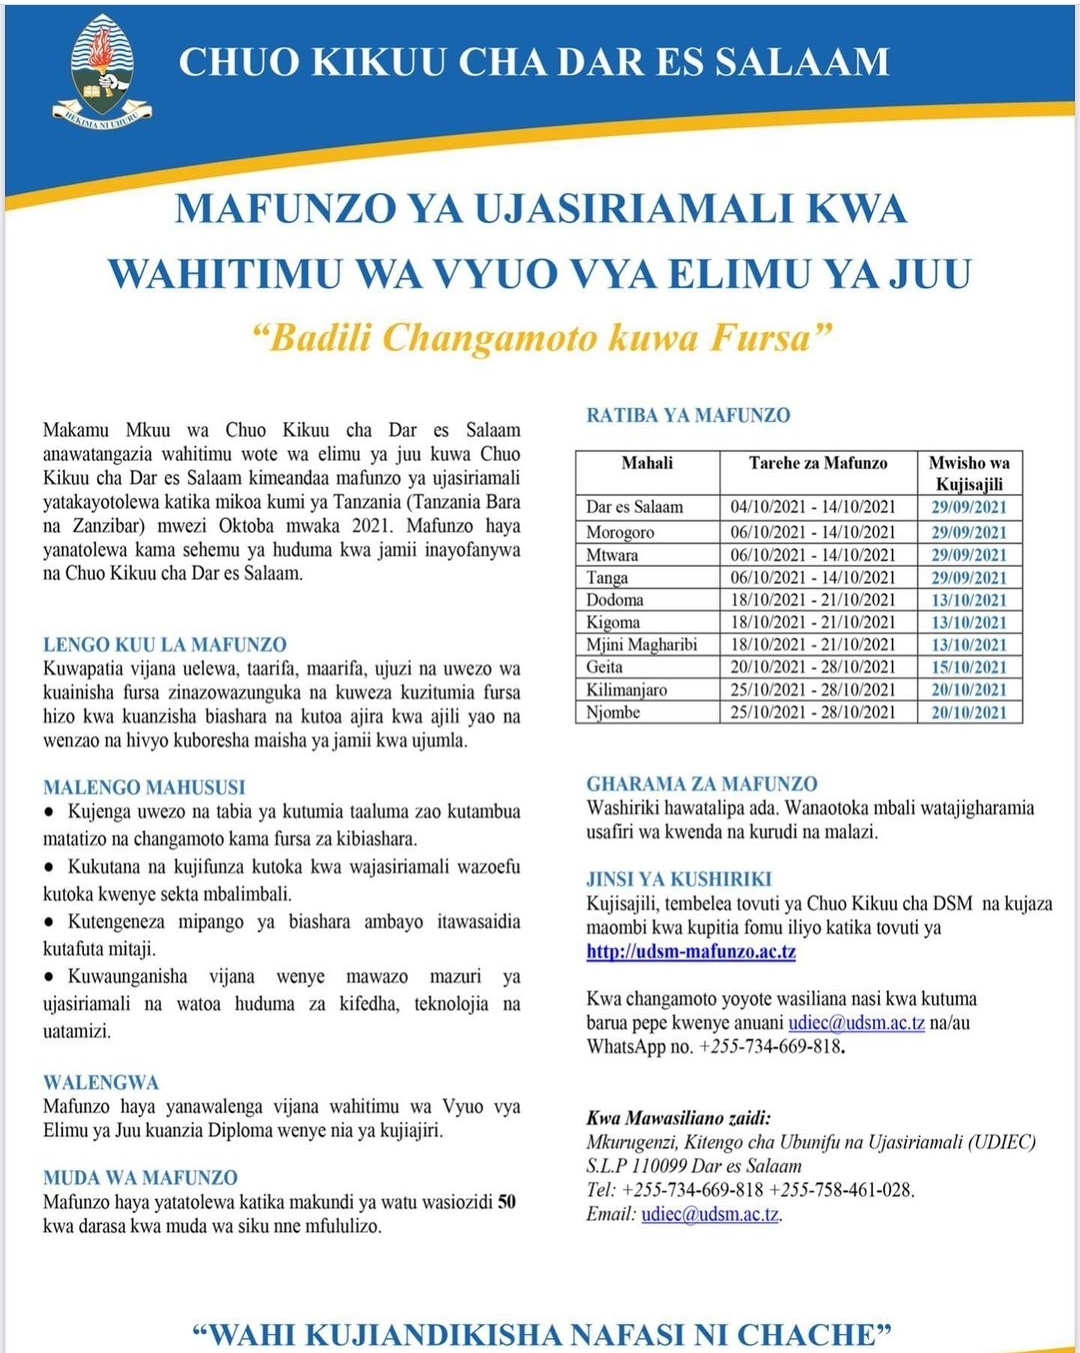 Udsm Entrepreneurship Training For Graduate (Http://Udsm-Mafunzo.ac.tz))